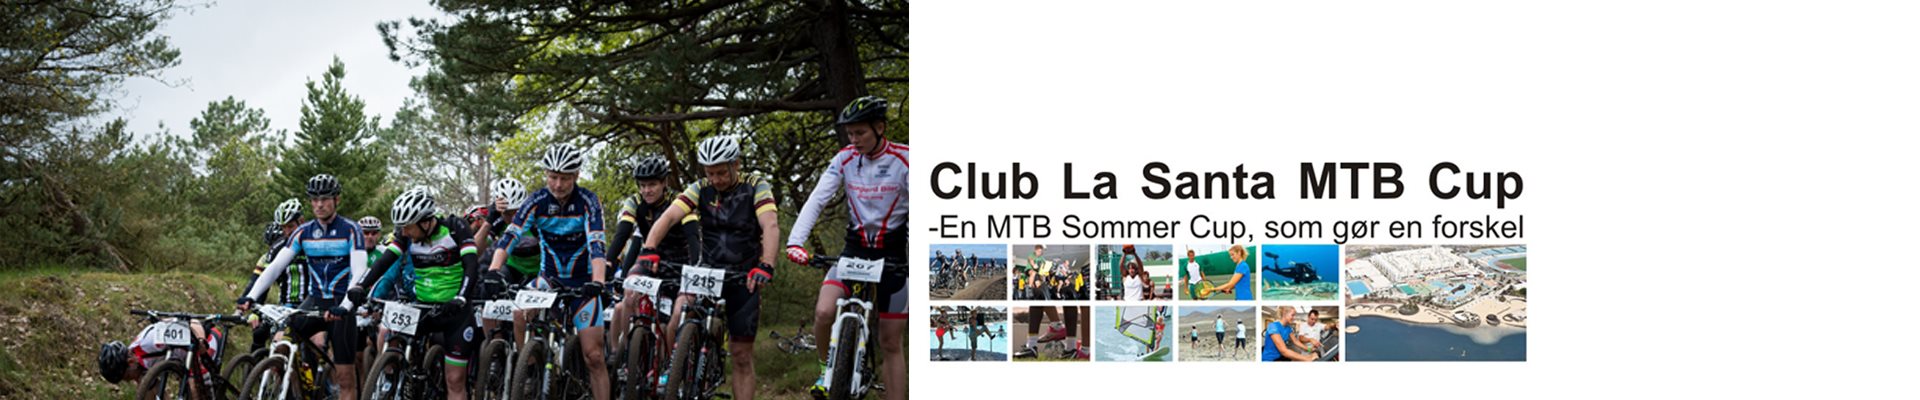 CLUB LA SANTA MTB CUP '24 - #3 Mentor IT, Esbjerg